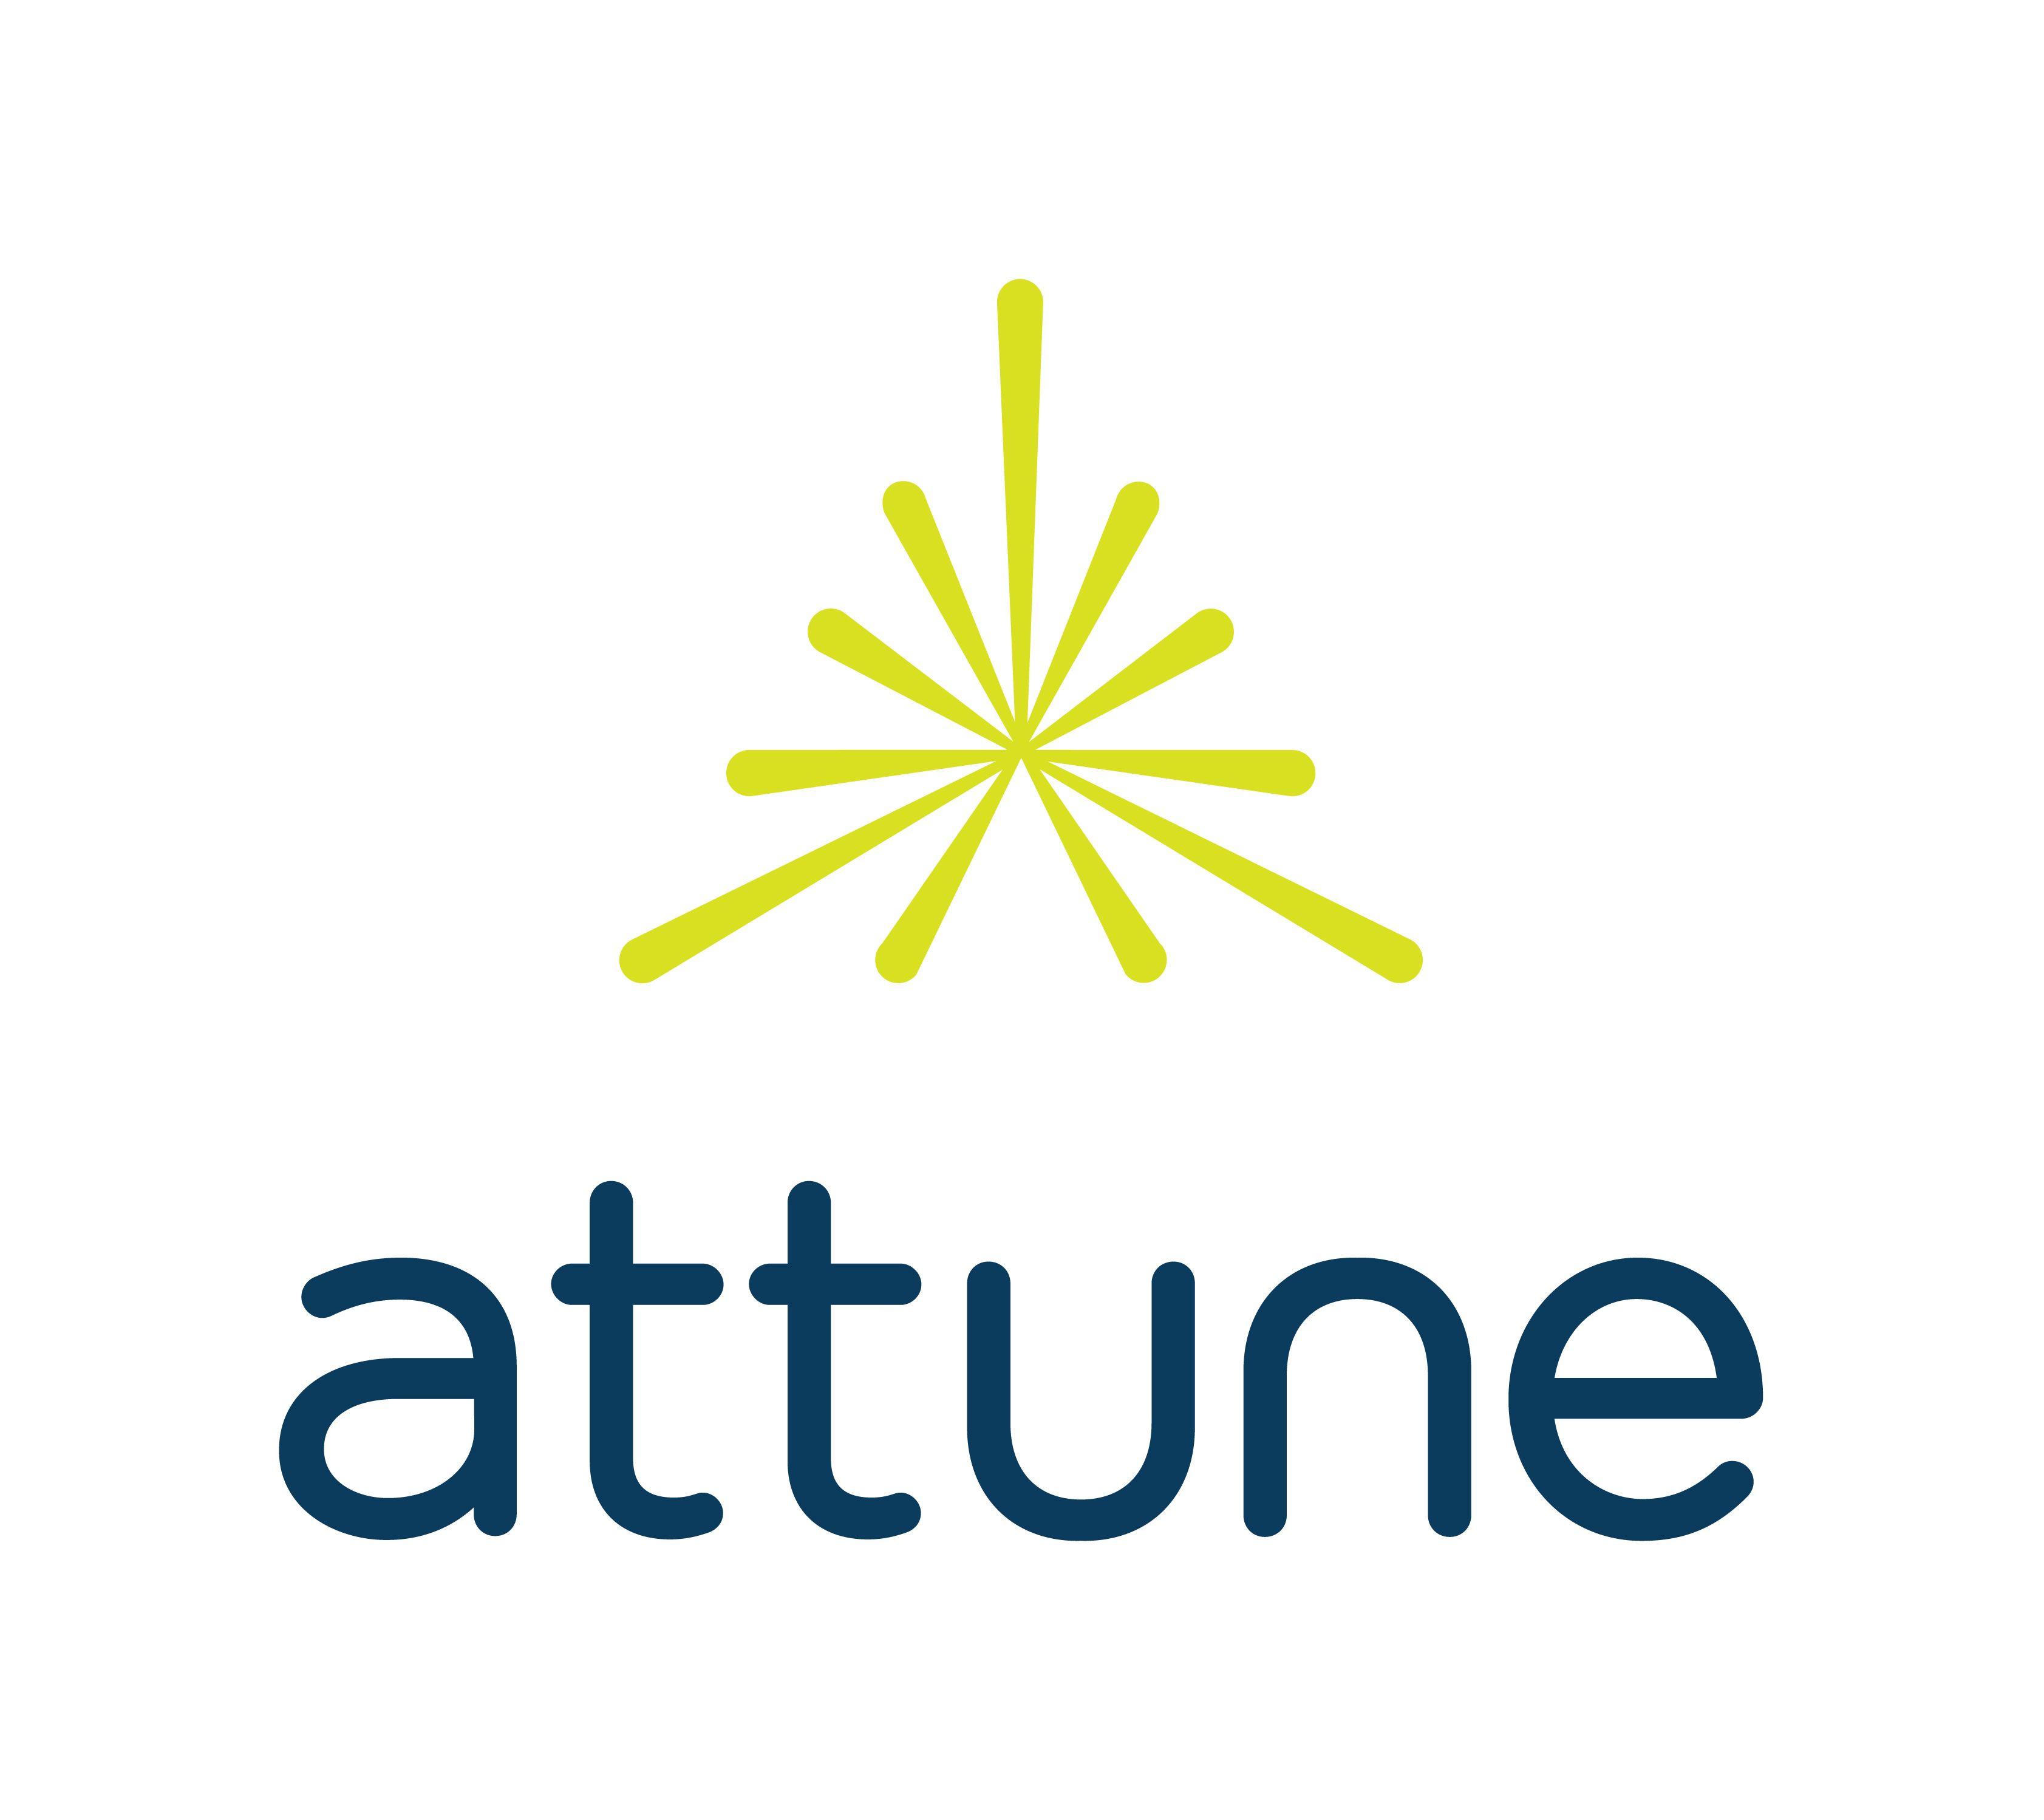 AIG Insurance Logo - AIG, Two Sigma, and Hamilton Insurance Group Launch Attune